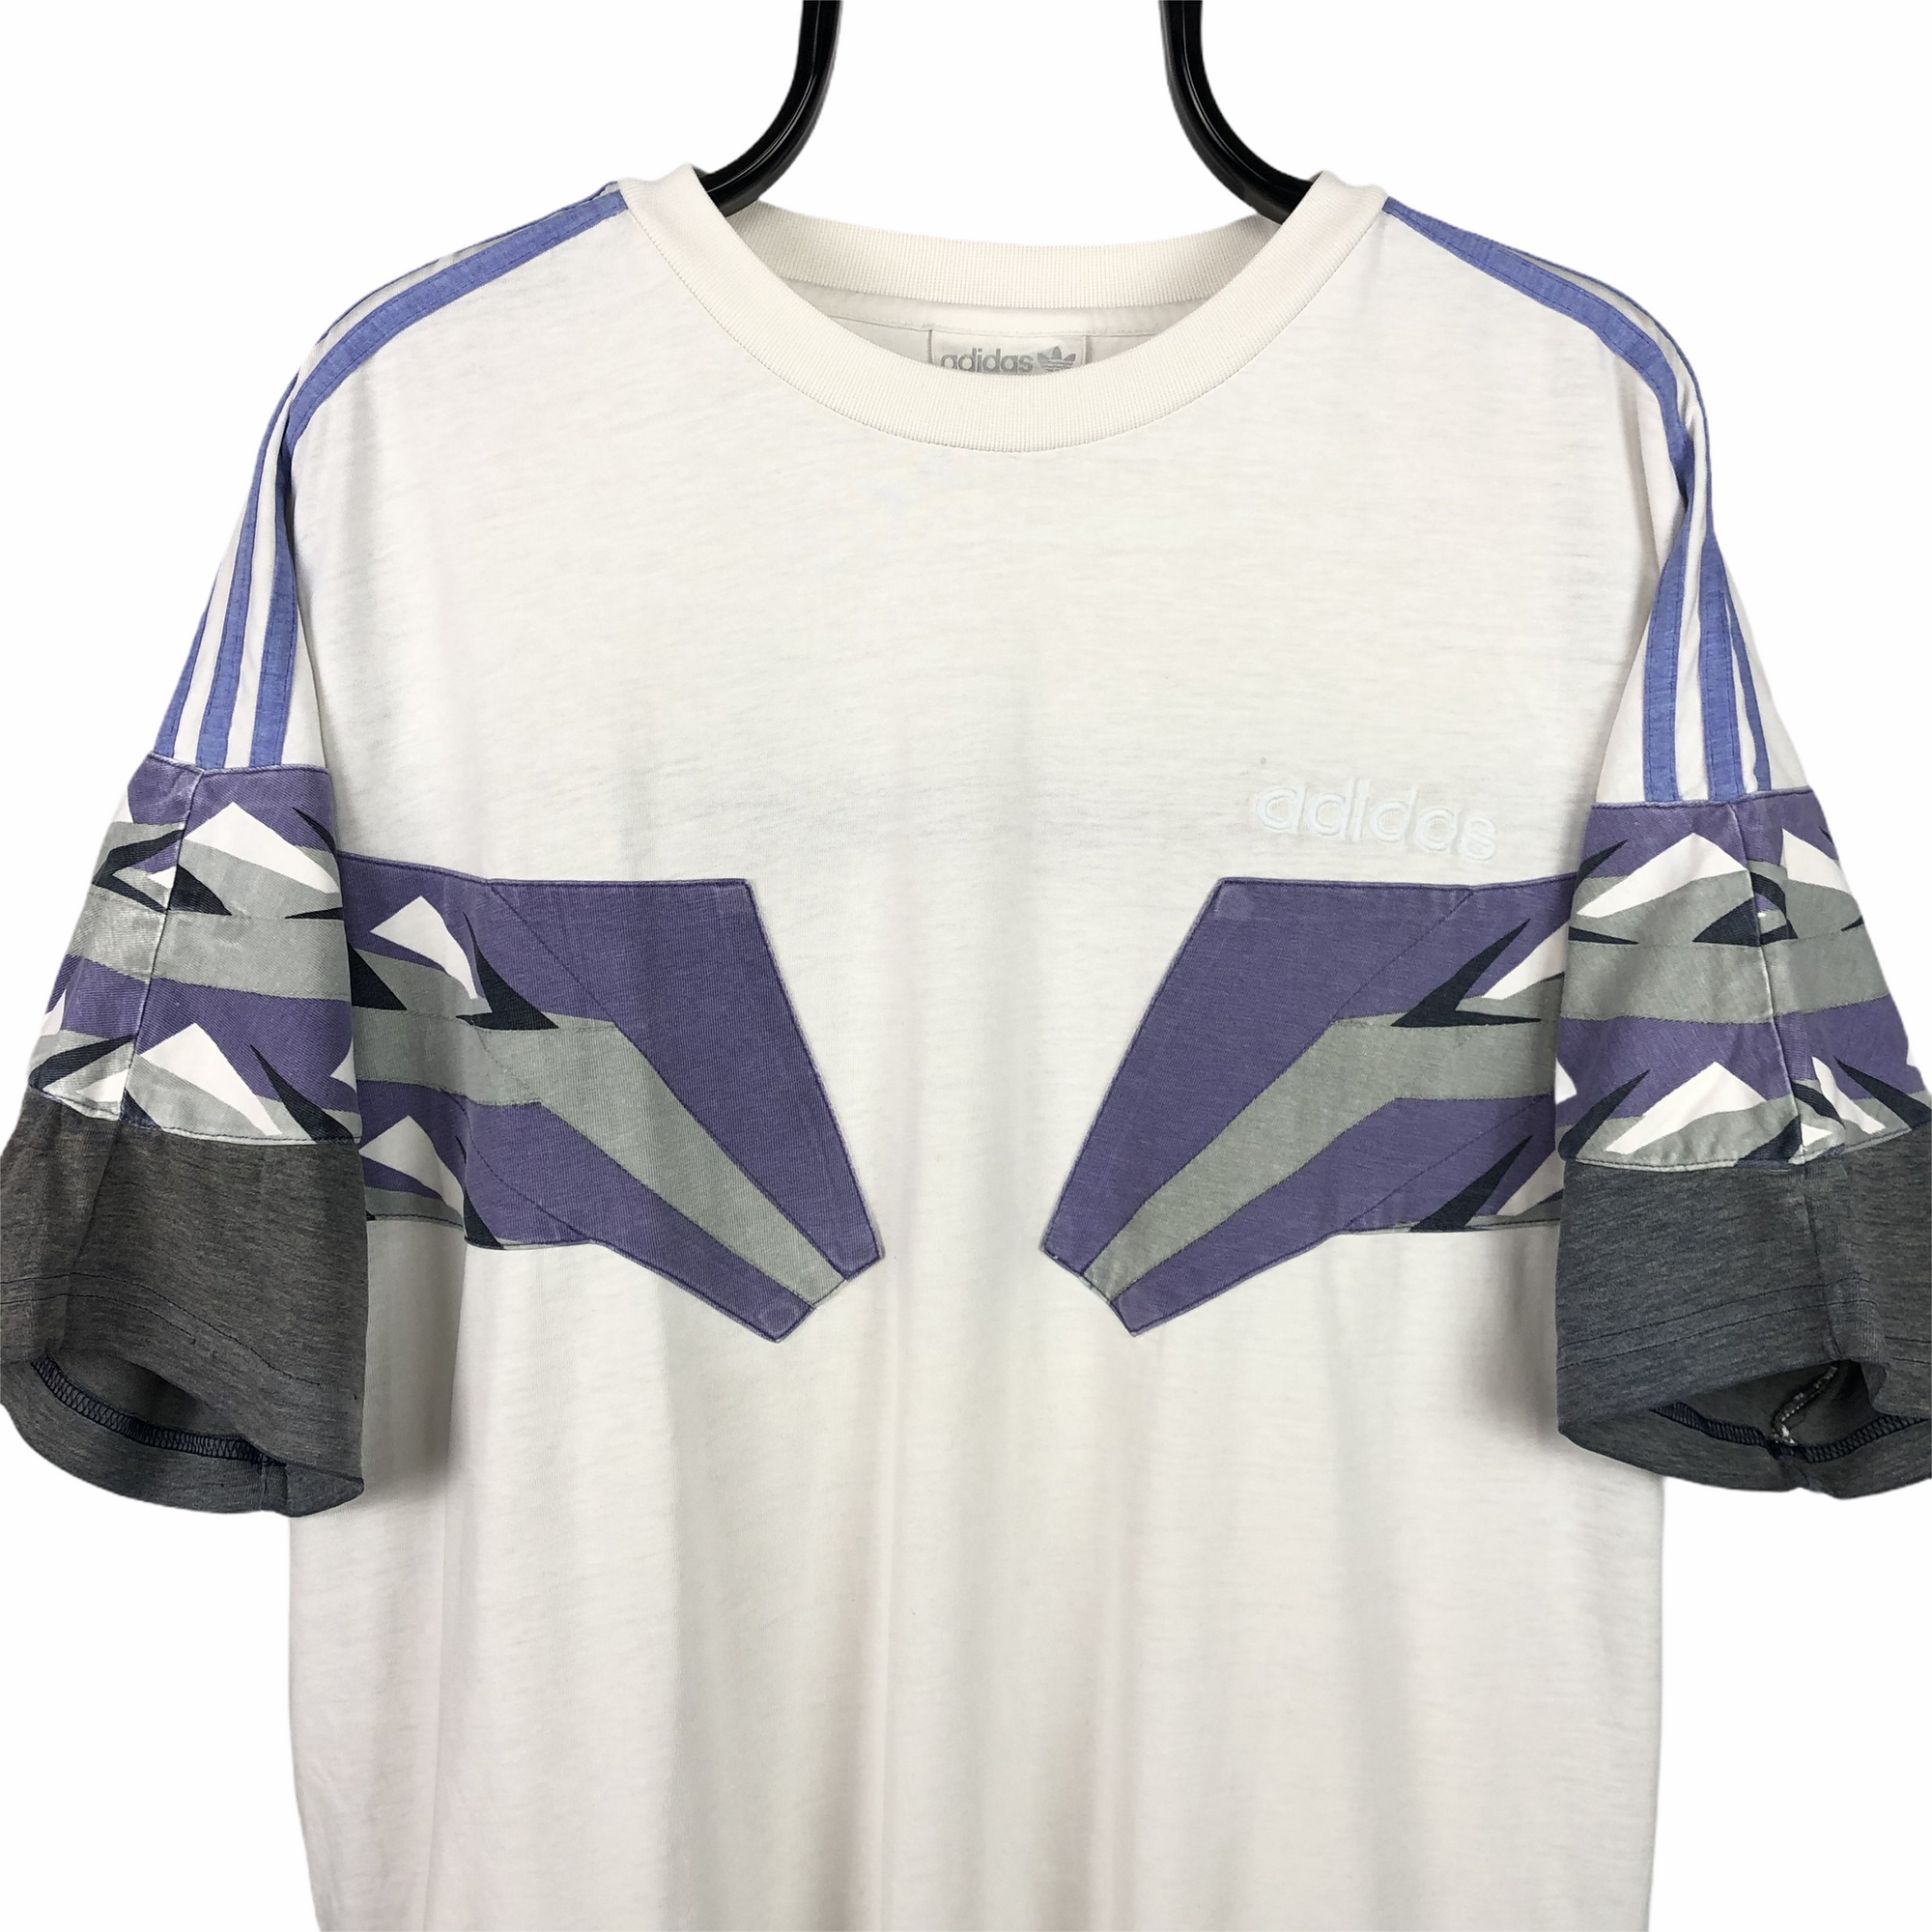 Vintage 90s Adidas Tee in White/Purple/Grey - Men's XL/Women's XXL